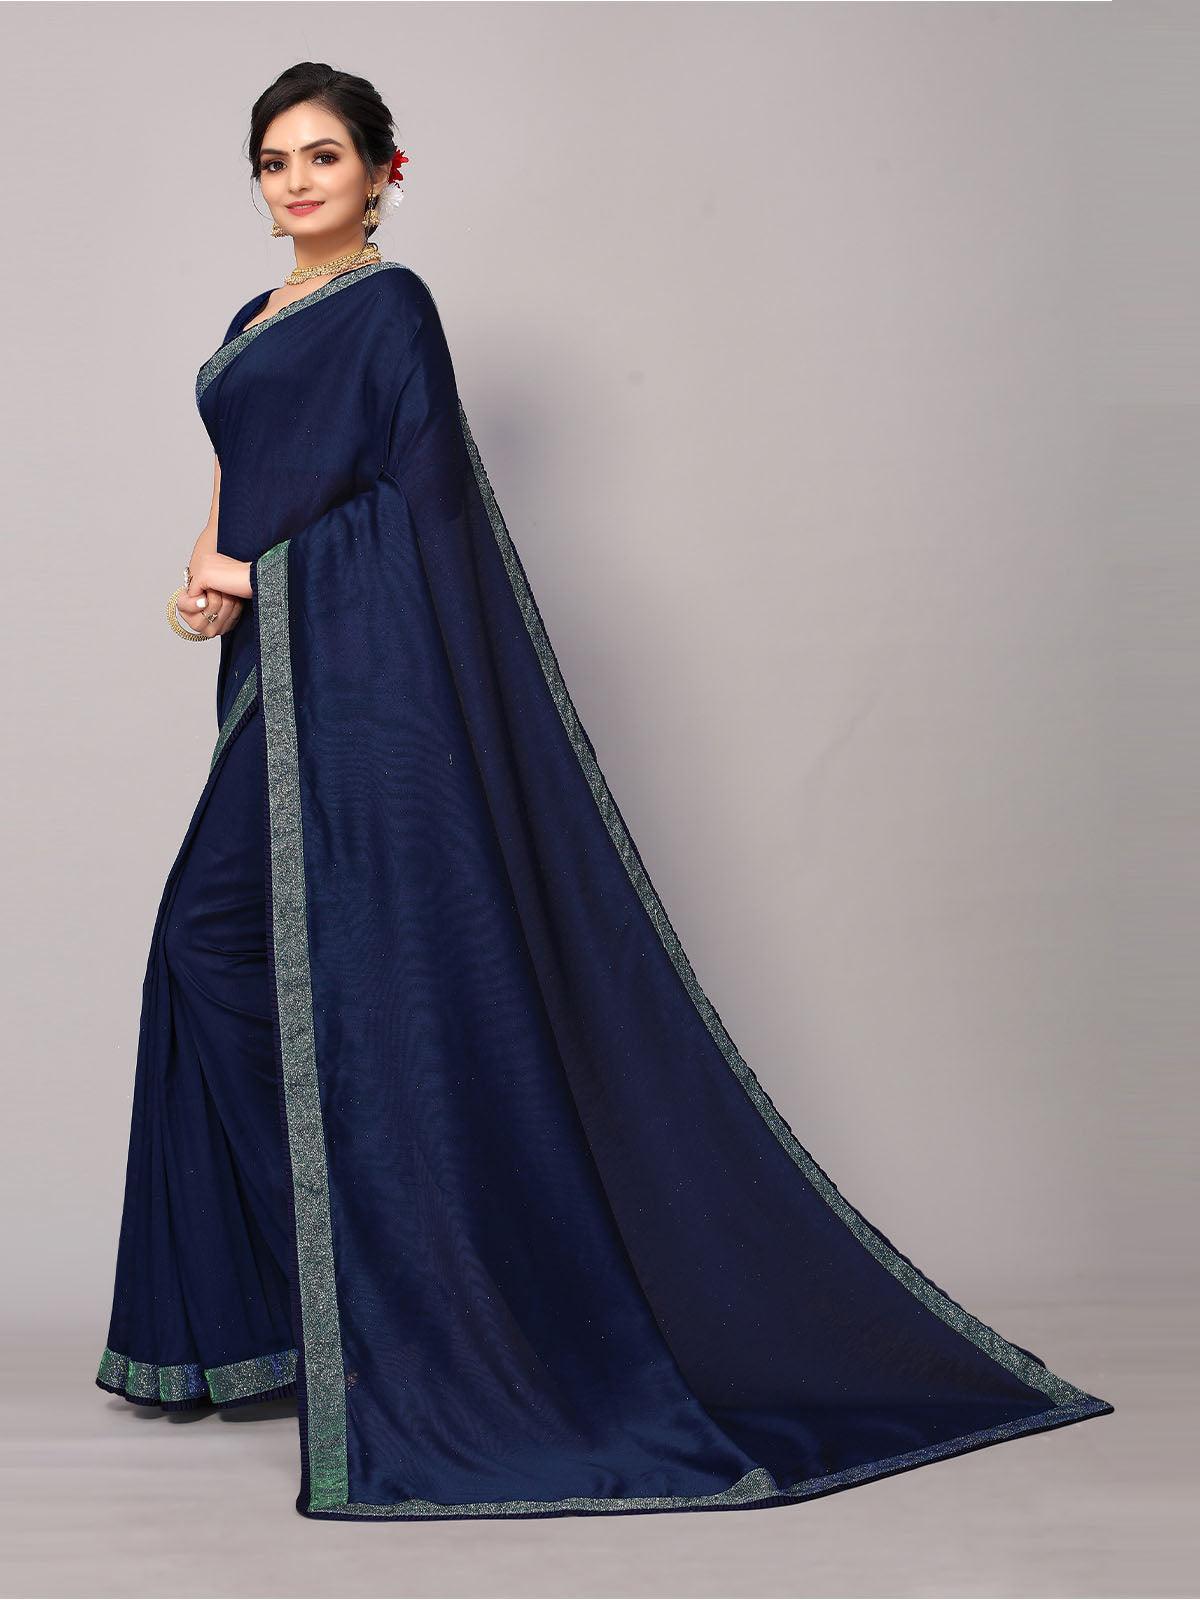 Blue Poly Silk Emblished Zari Border Saree With Matching Blouse. - Odette